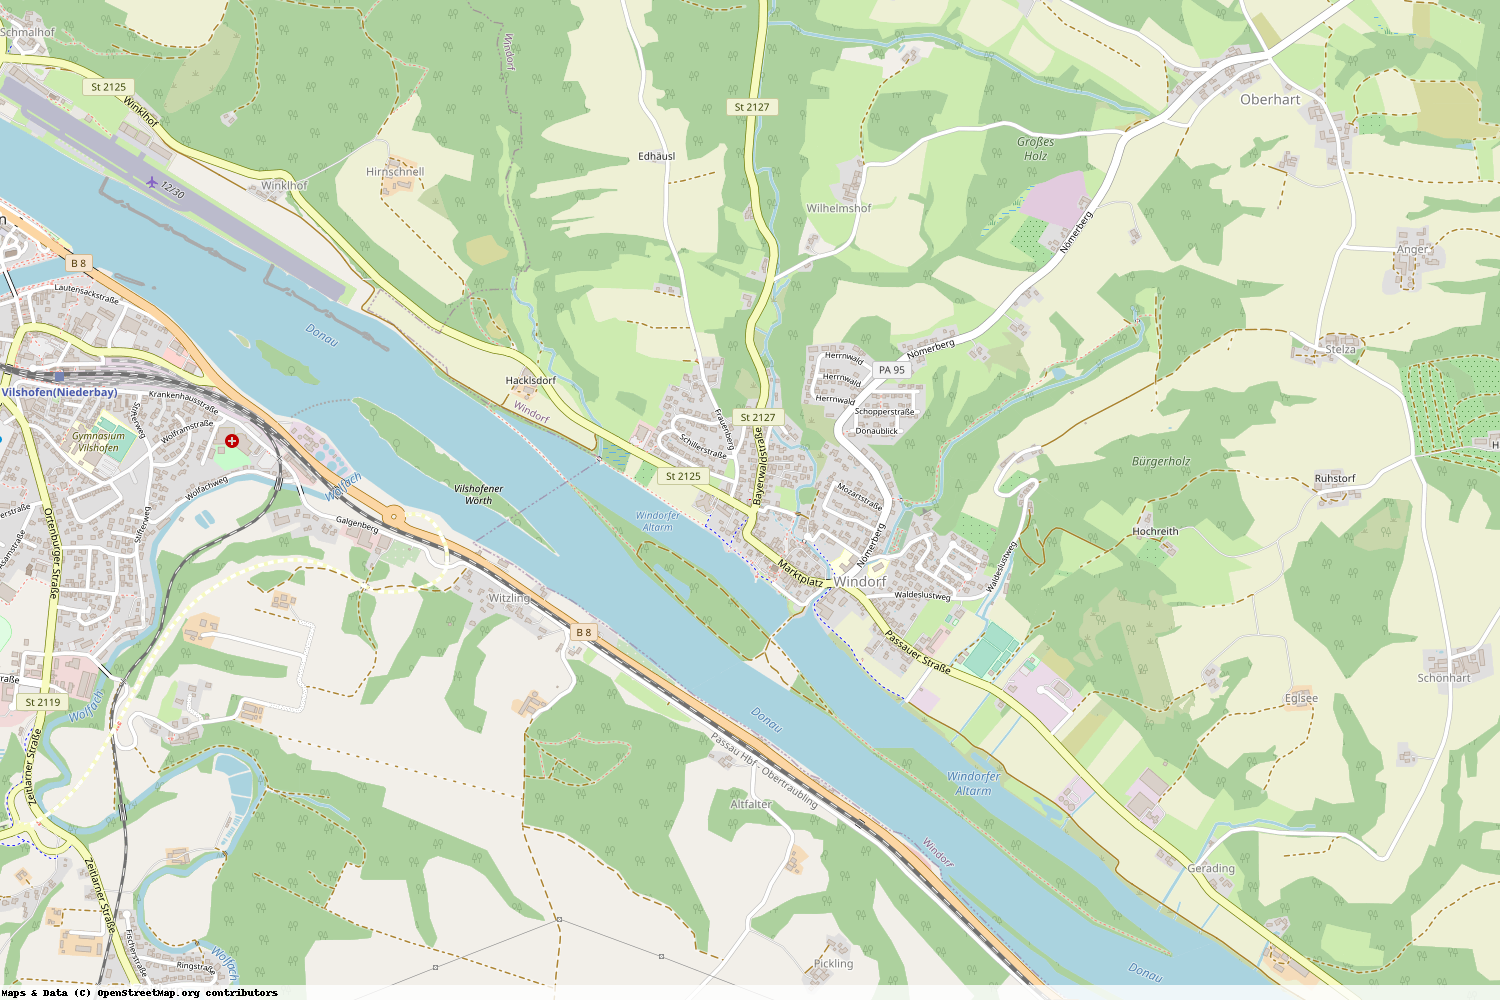 Ist gerade Stromausfall in Bayern - Passau - Windorf?